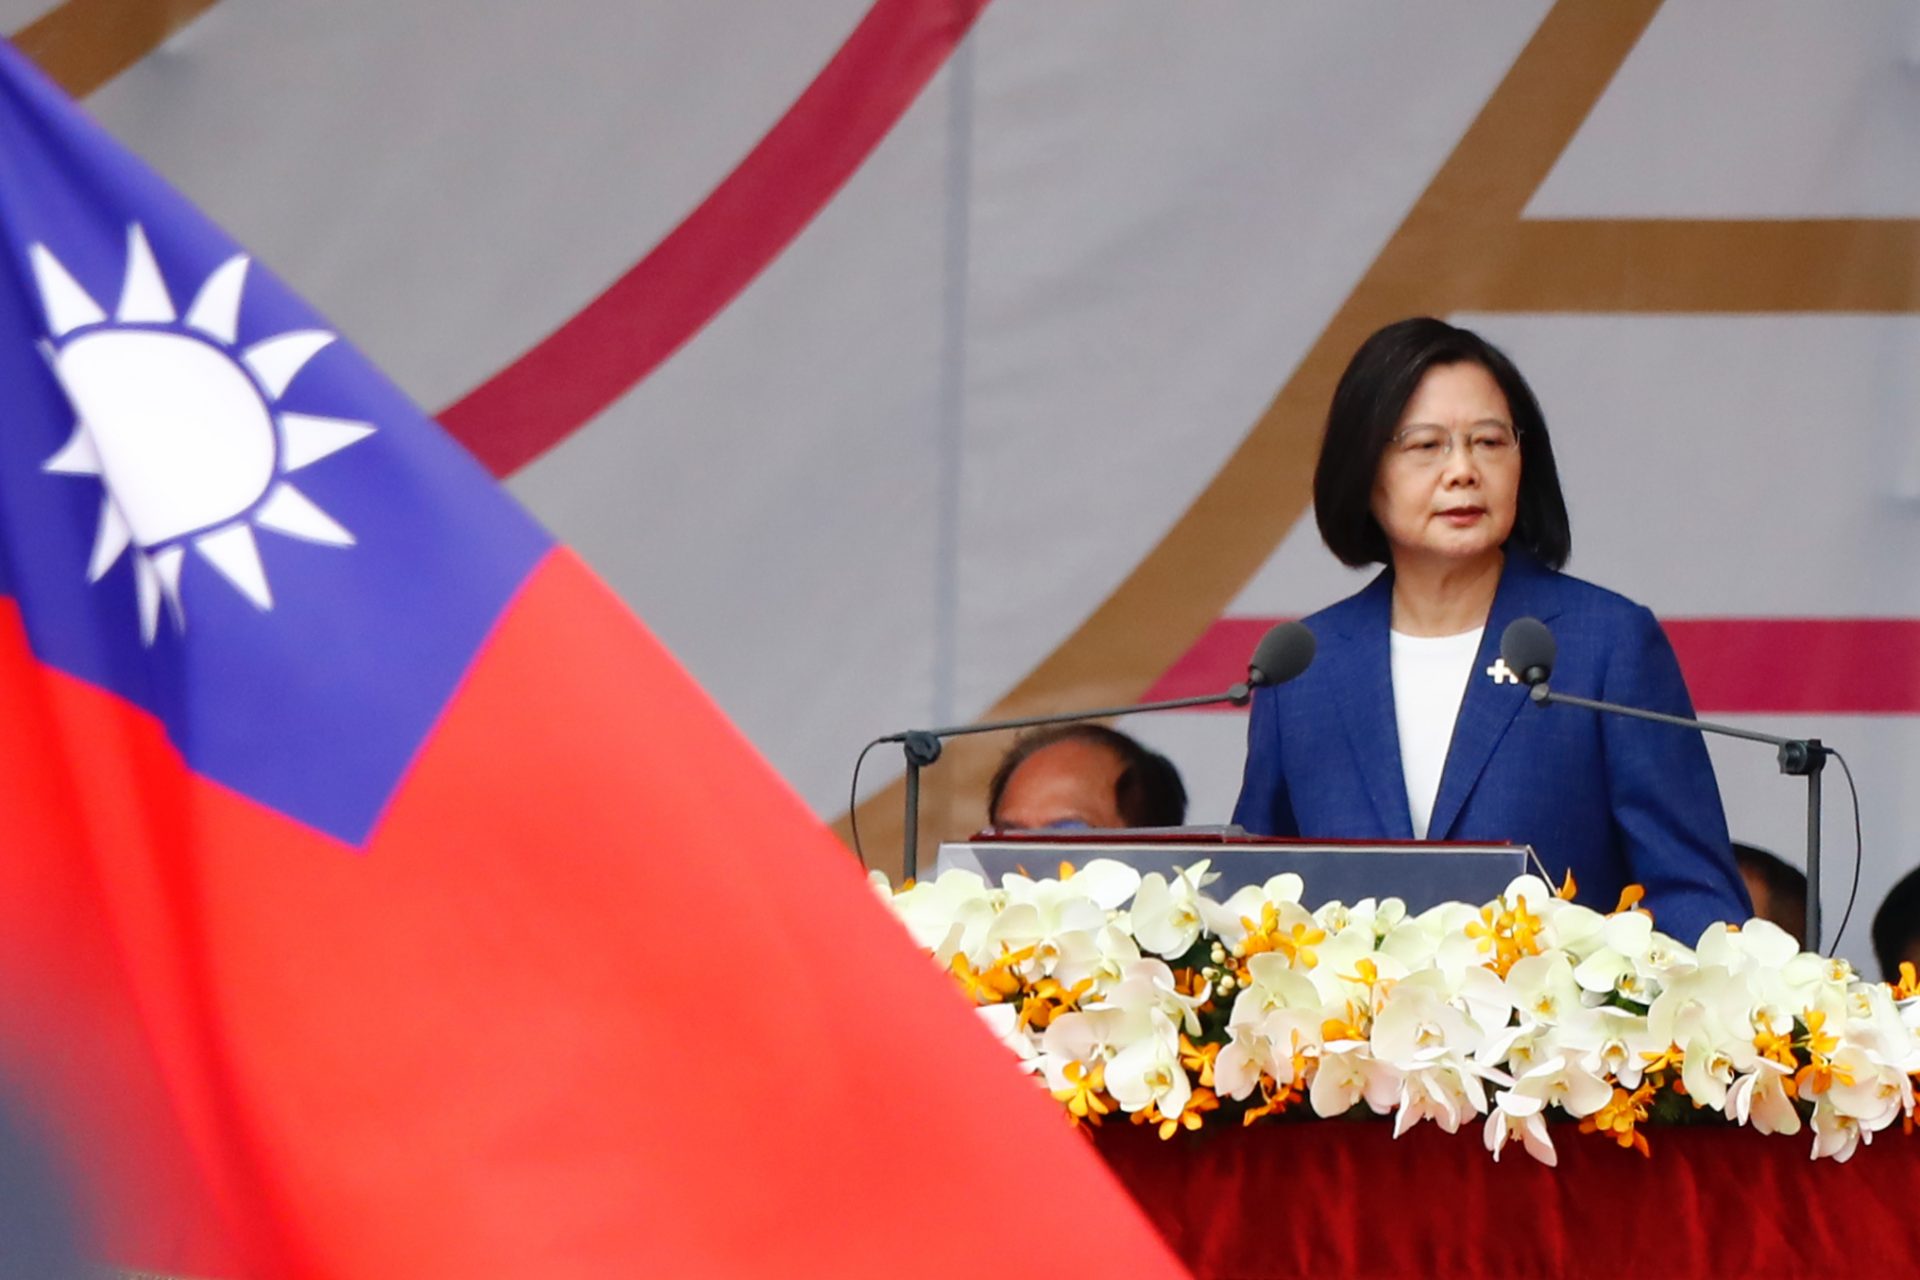 Taiwan’s president responds